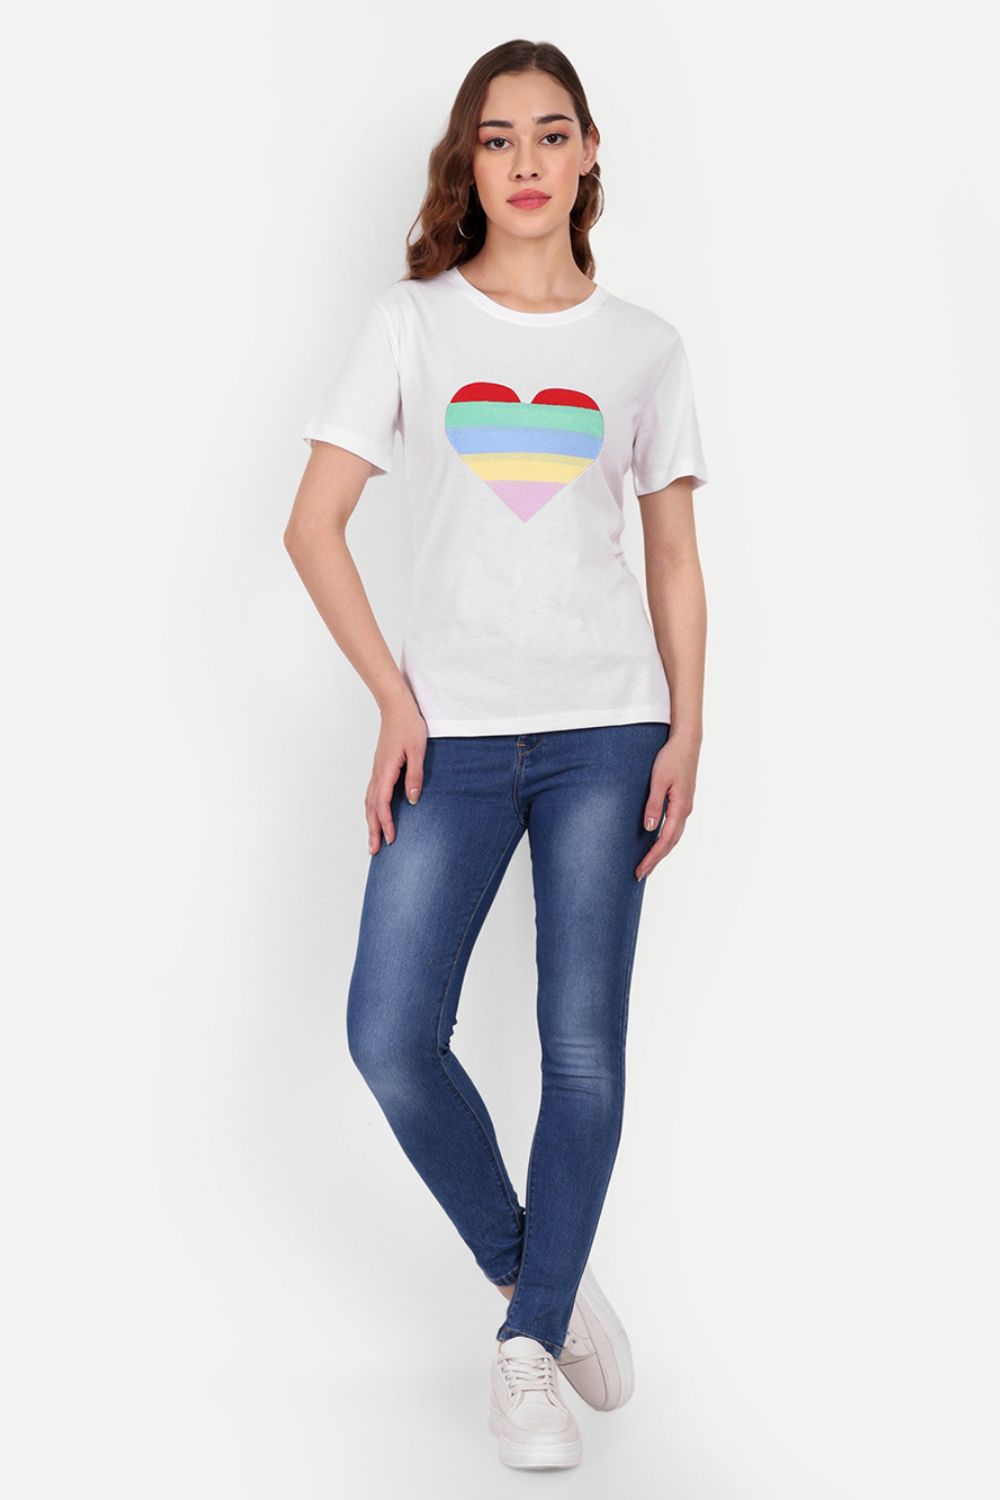 Big Rainbow Heart T-Shirt